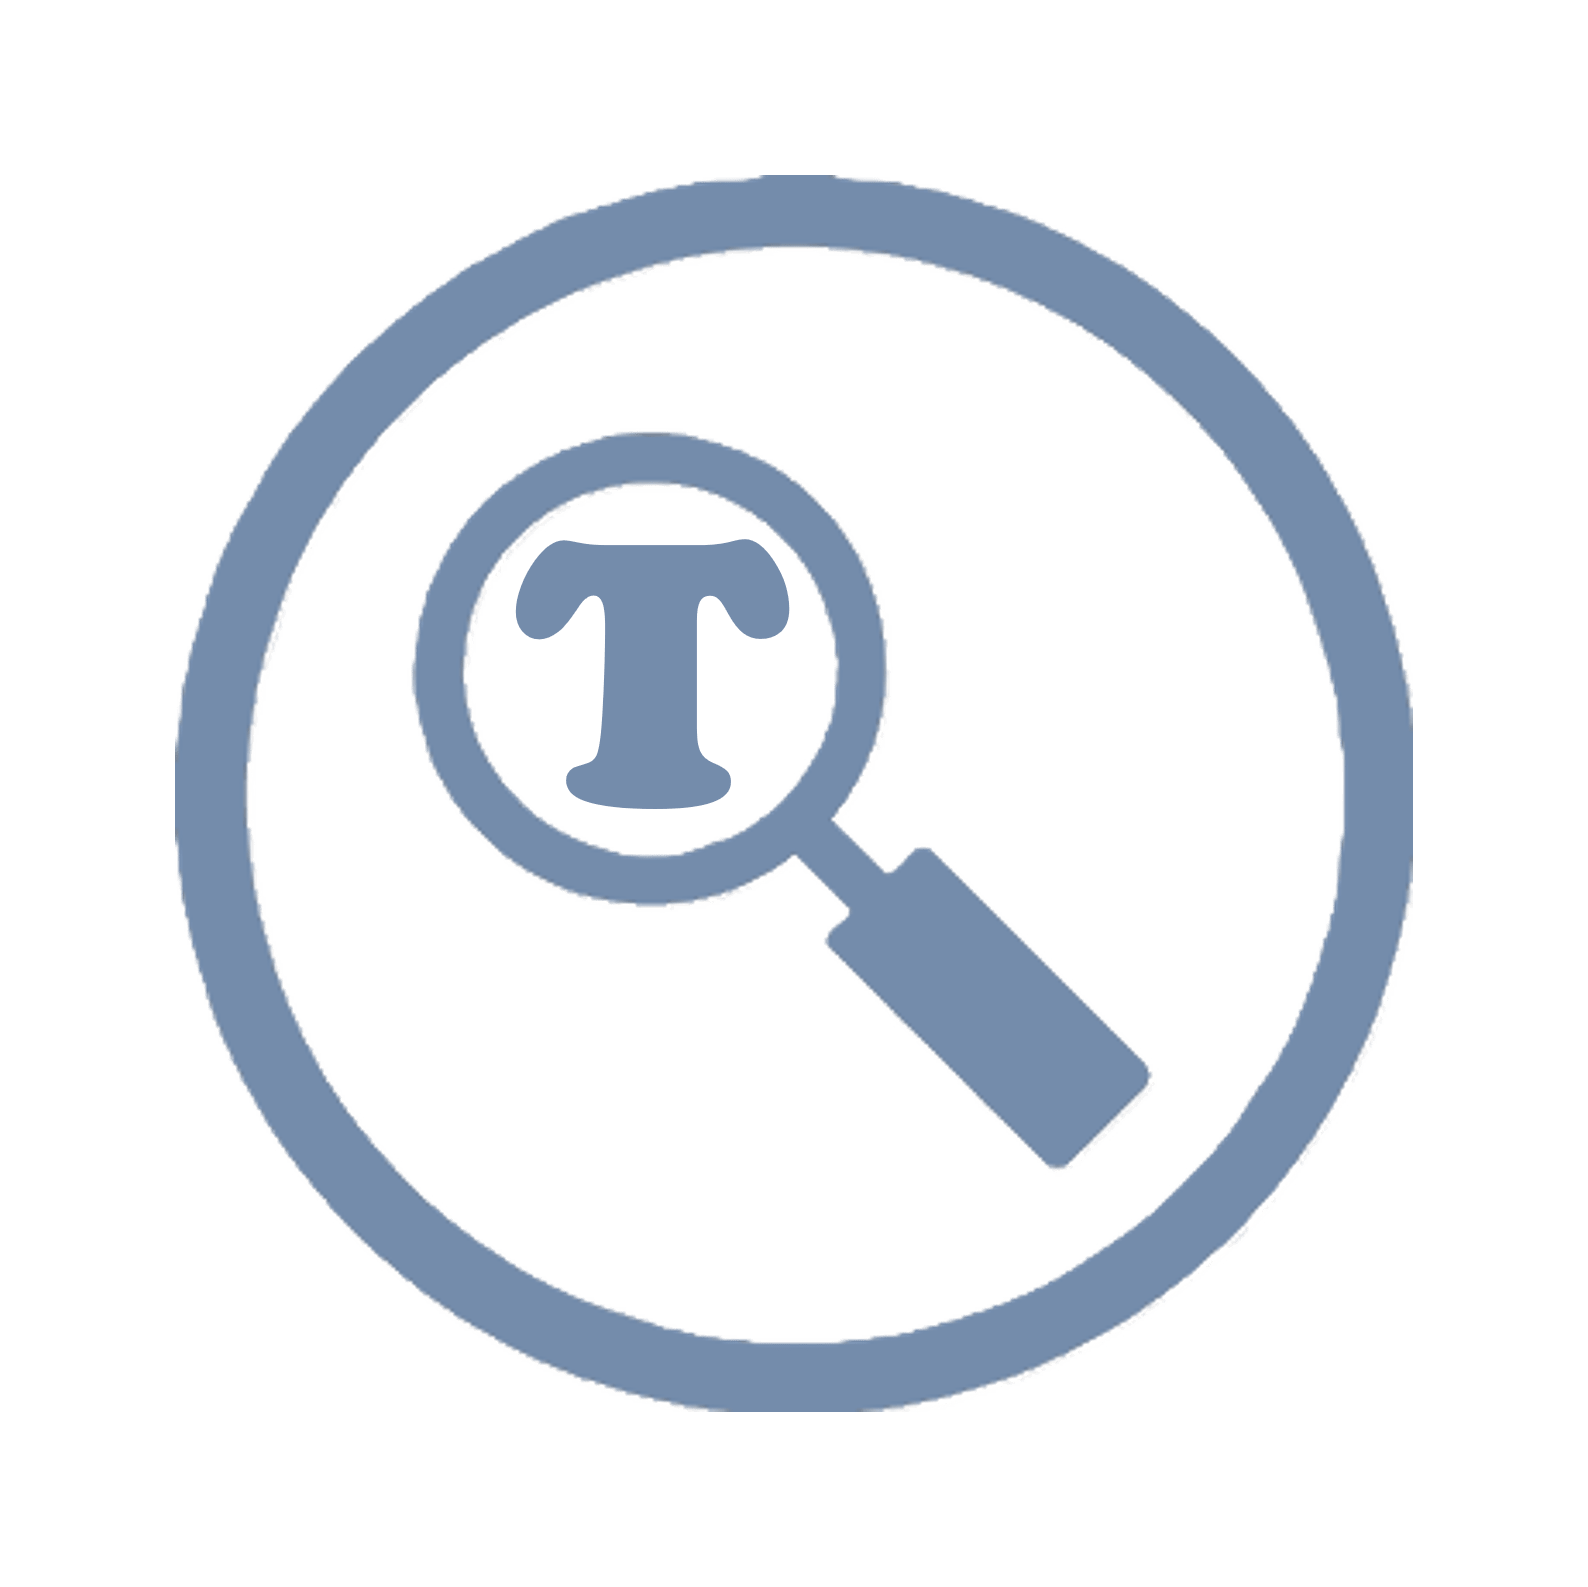 Trademark Search (1 - 2 weeks) - Miller IP